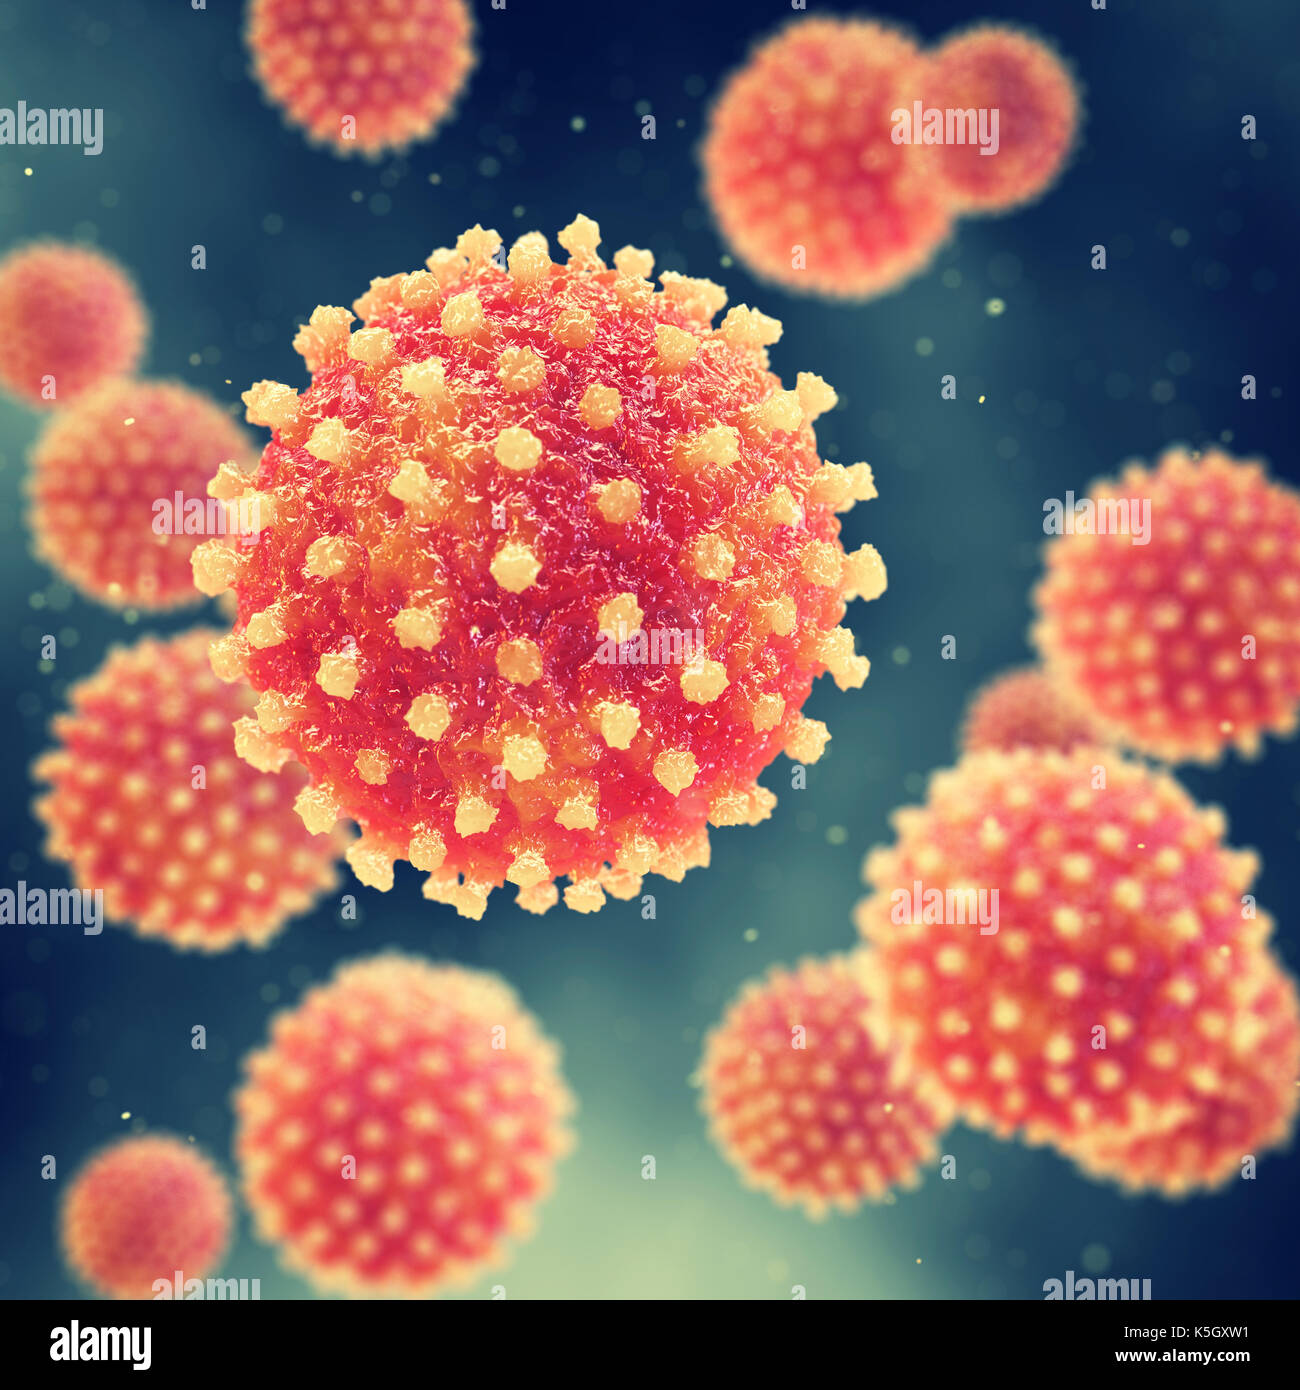 Viral hepatitis infection causing chronic liver disease , Hepatitis viruses Stock Photo